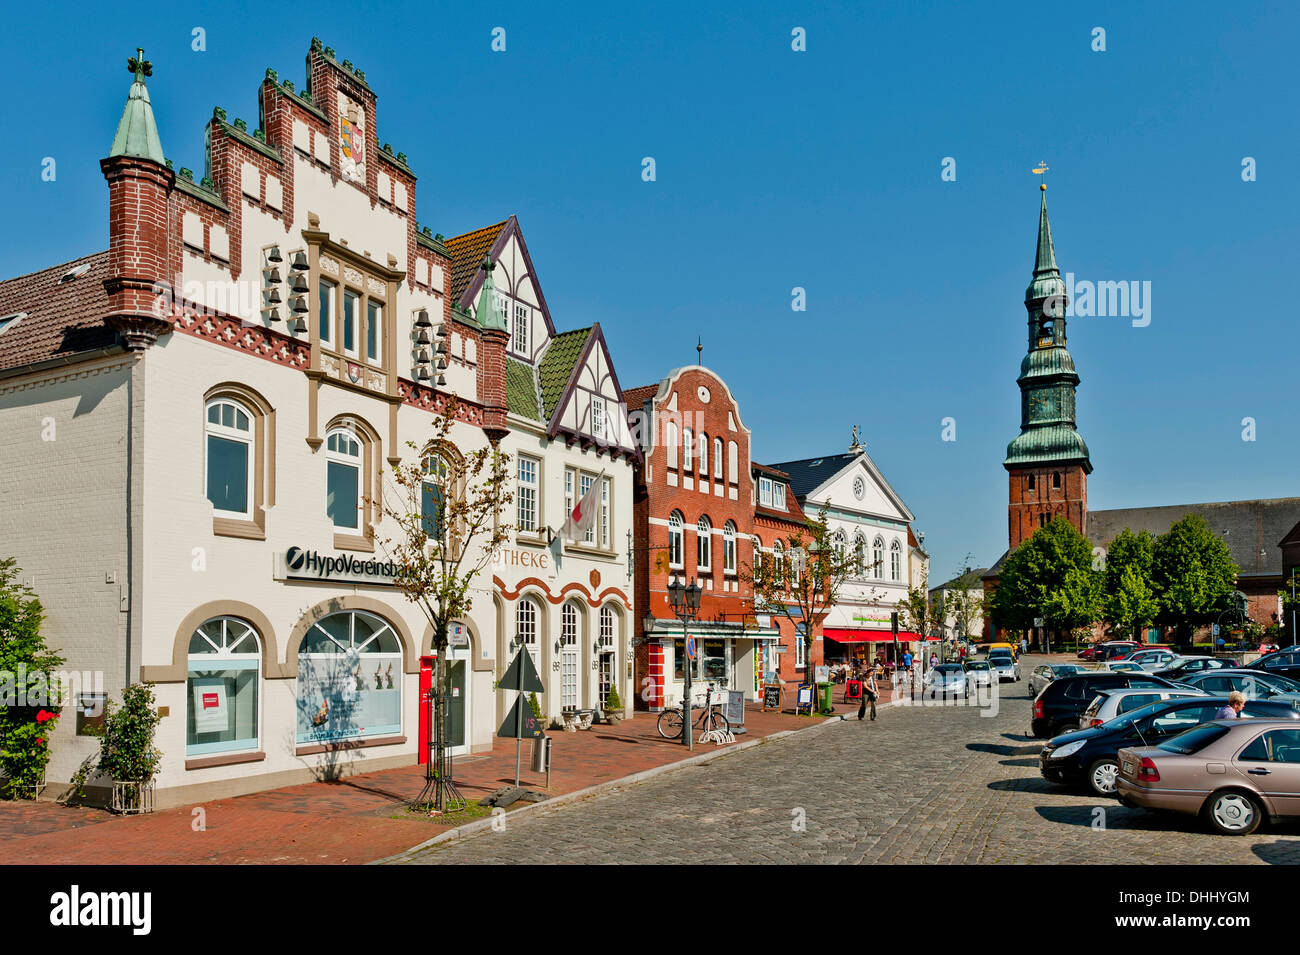 Market place of Toenning, Northern Frisia, Schleswig Holstein, Germany Stock Photo